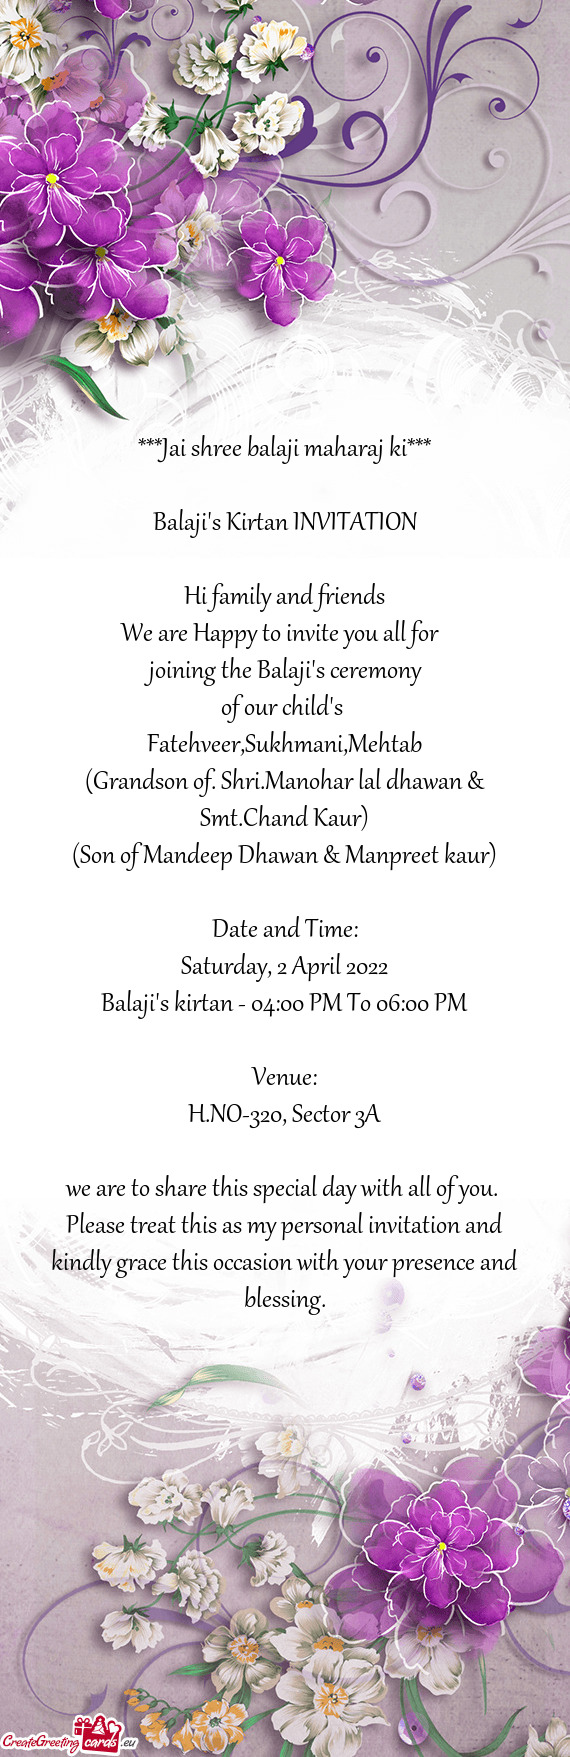 (Grandson of. Shri.Manohar lal dhawan & Smt.Chand Kaur)